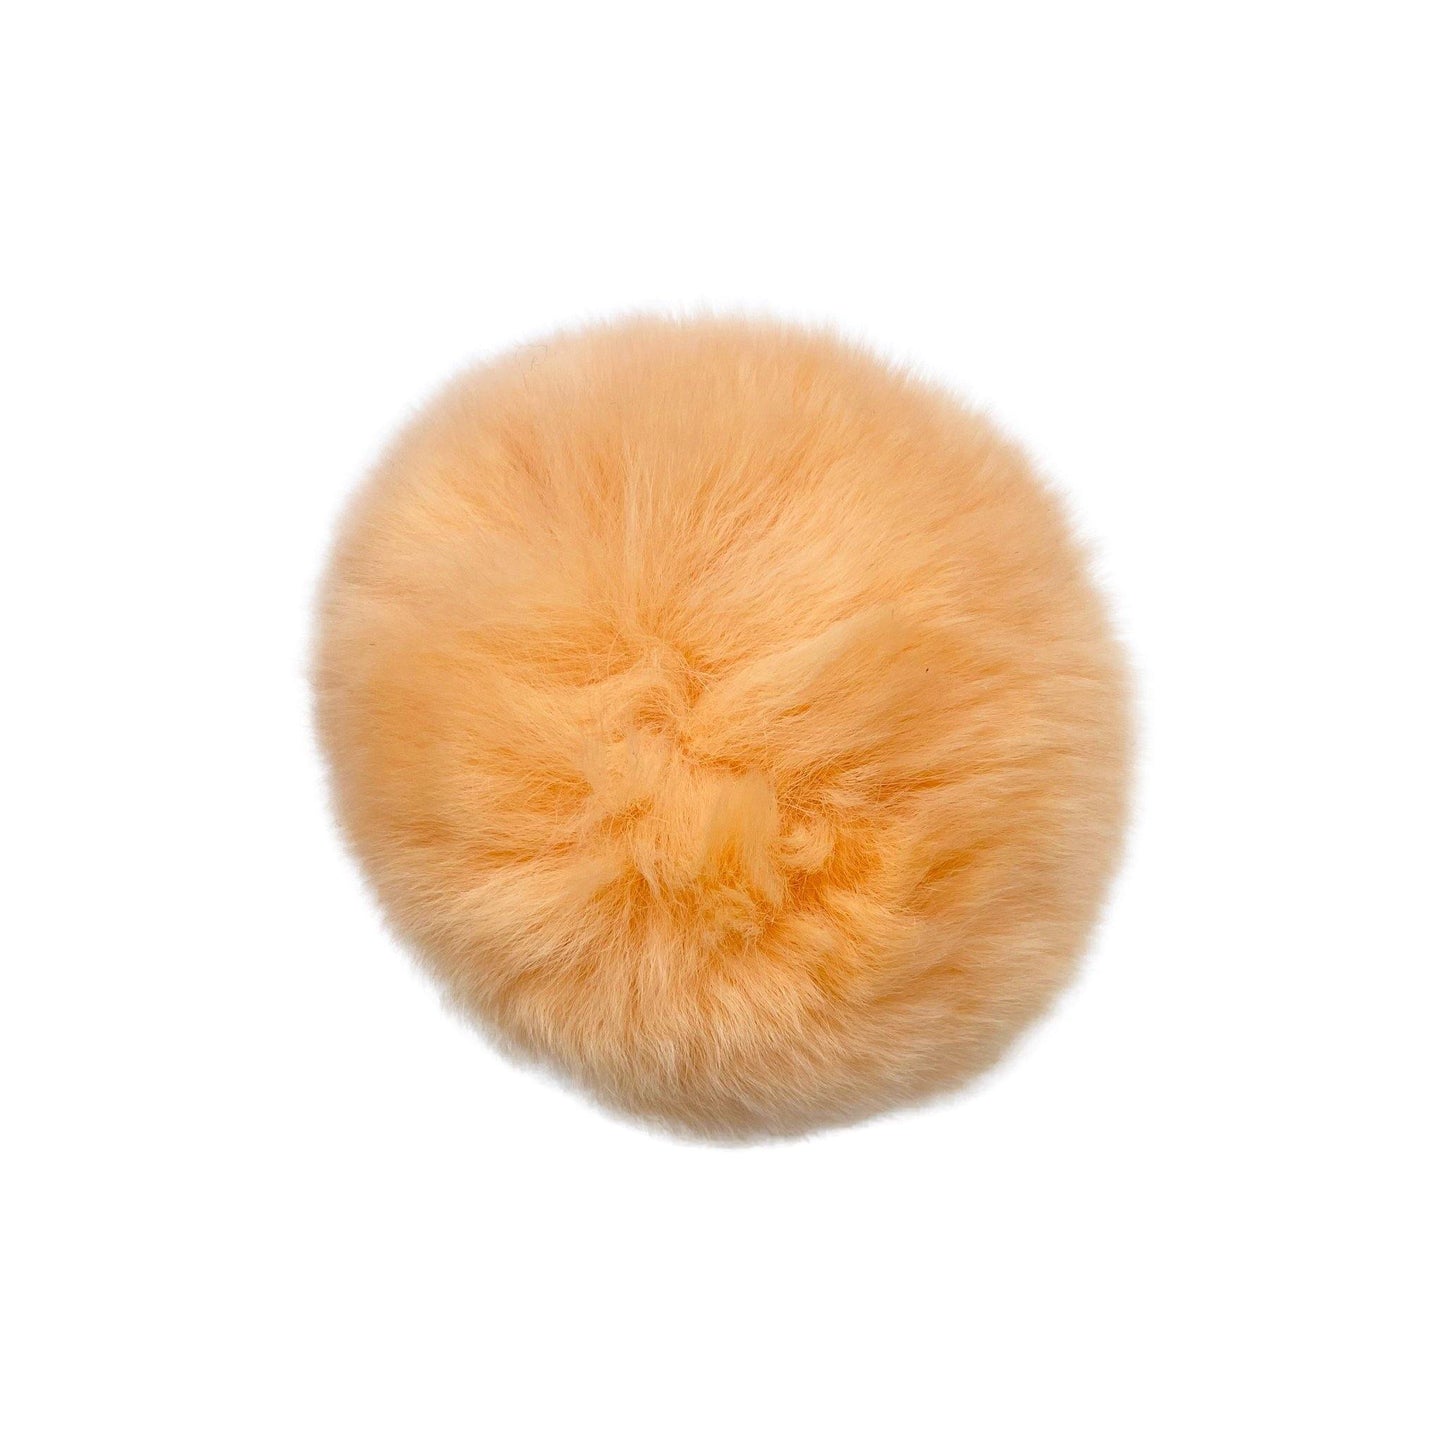 3" Fur Ball | Pom Pom Puff - Pretty in Pink Supply